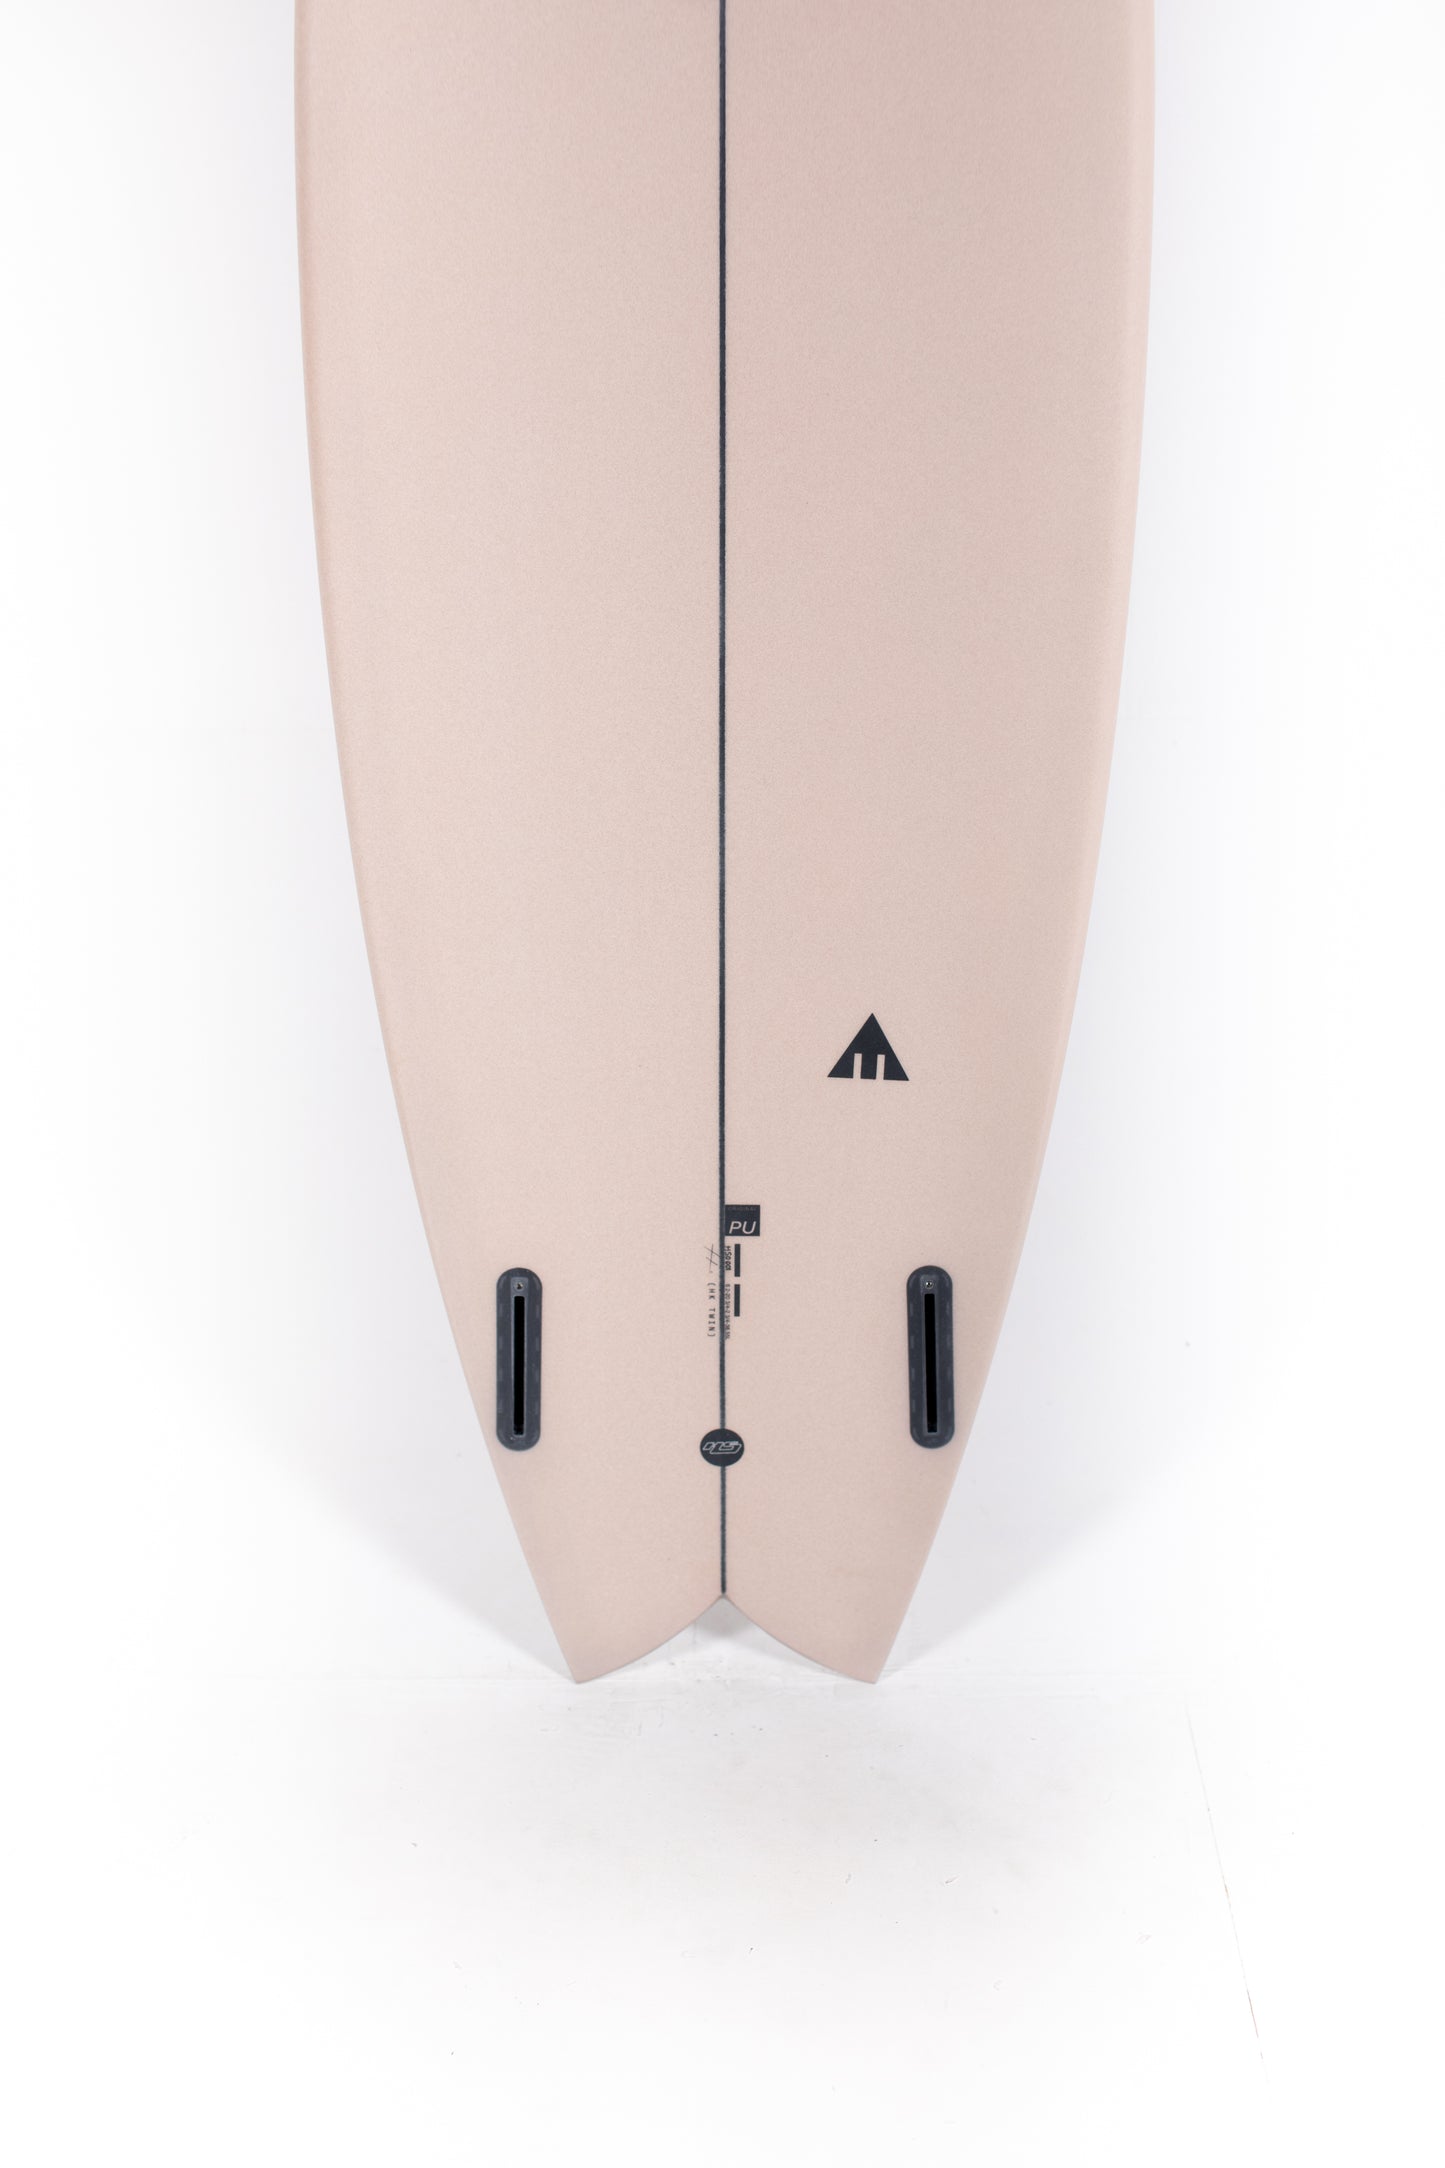 
                  
                    Pukas Surf Shop - HaydenShapes Surfboard - HYPTO KRYPTO TWIN PU - 6'2" X 20 3/4" X 2 3/4" - 38.55L
                  
                